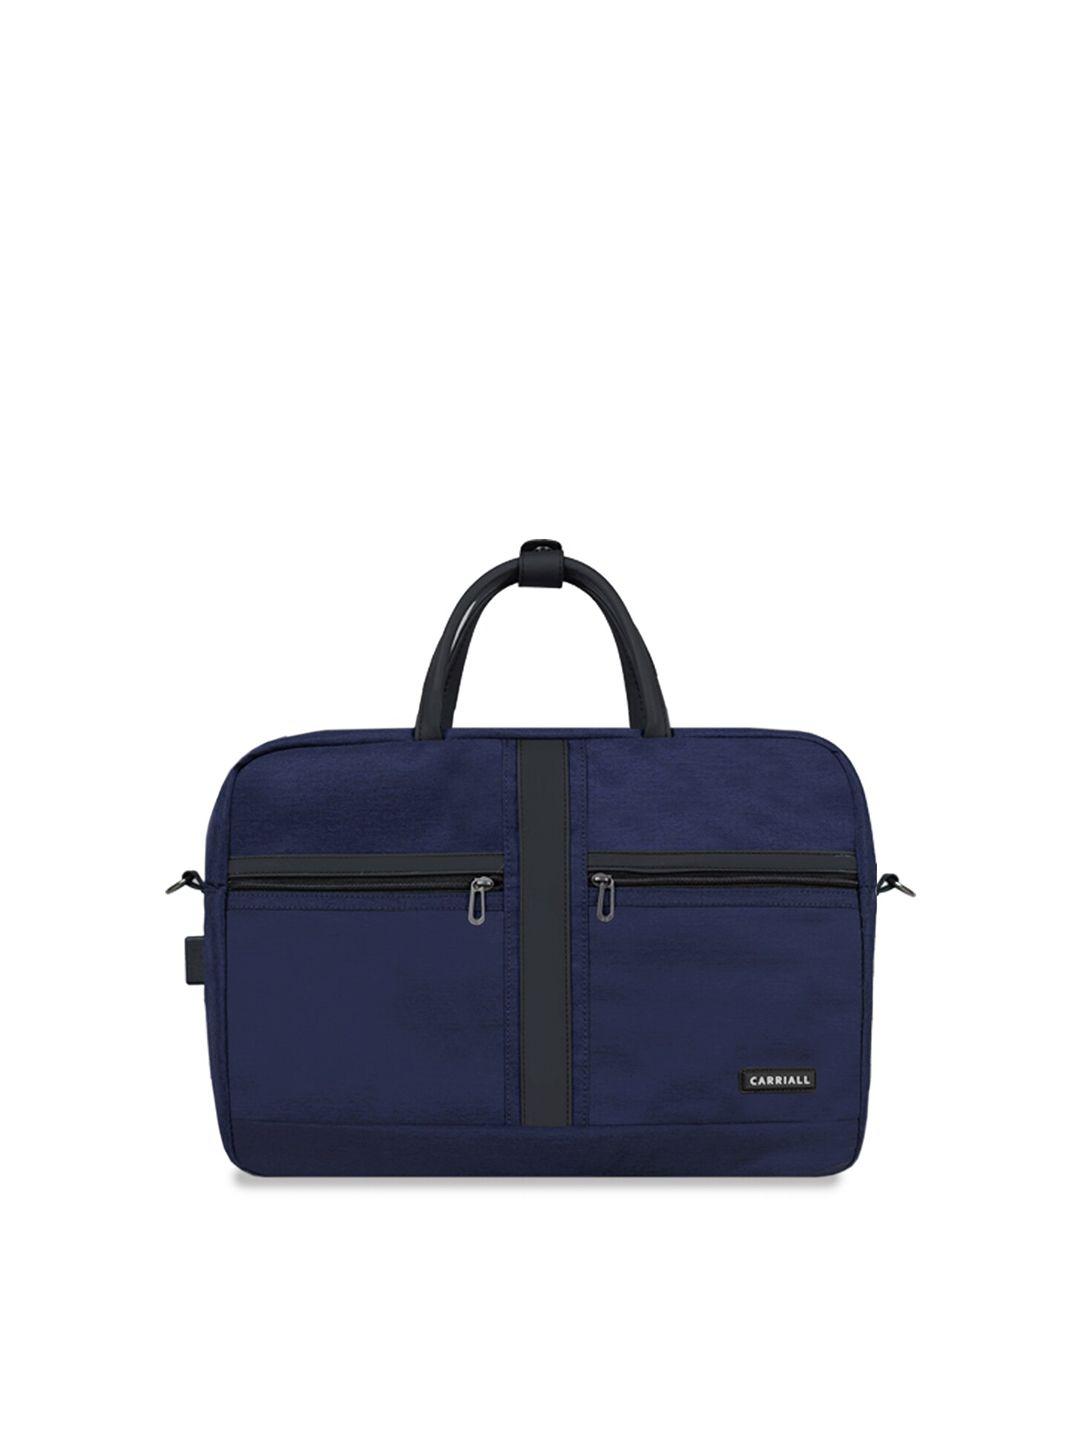 carriall unisex navy blue laptop messenger bag